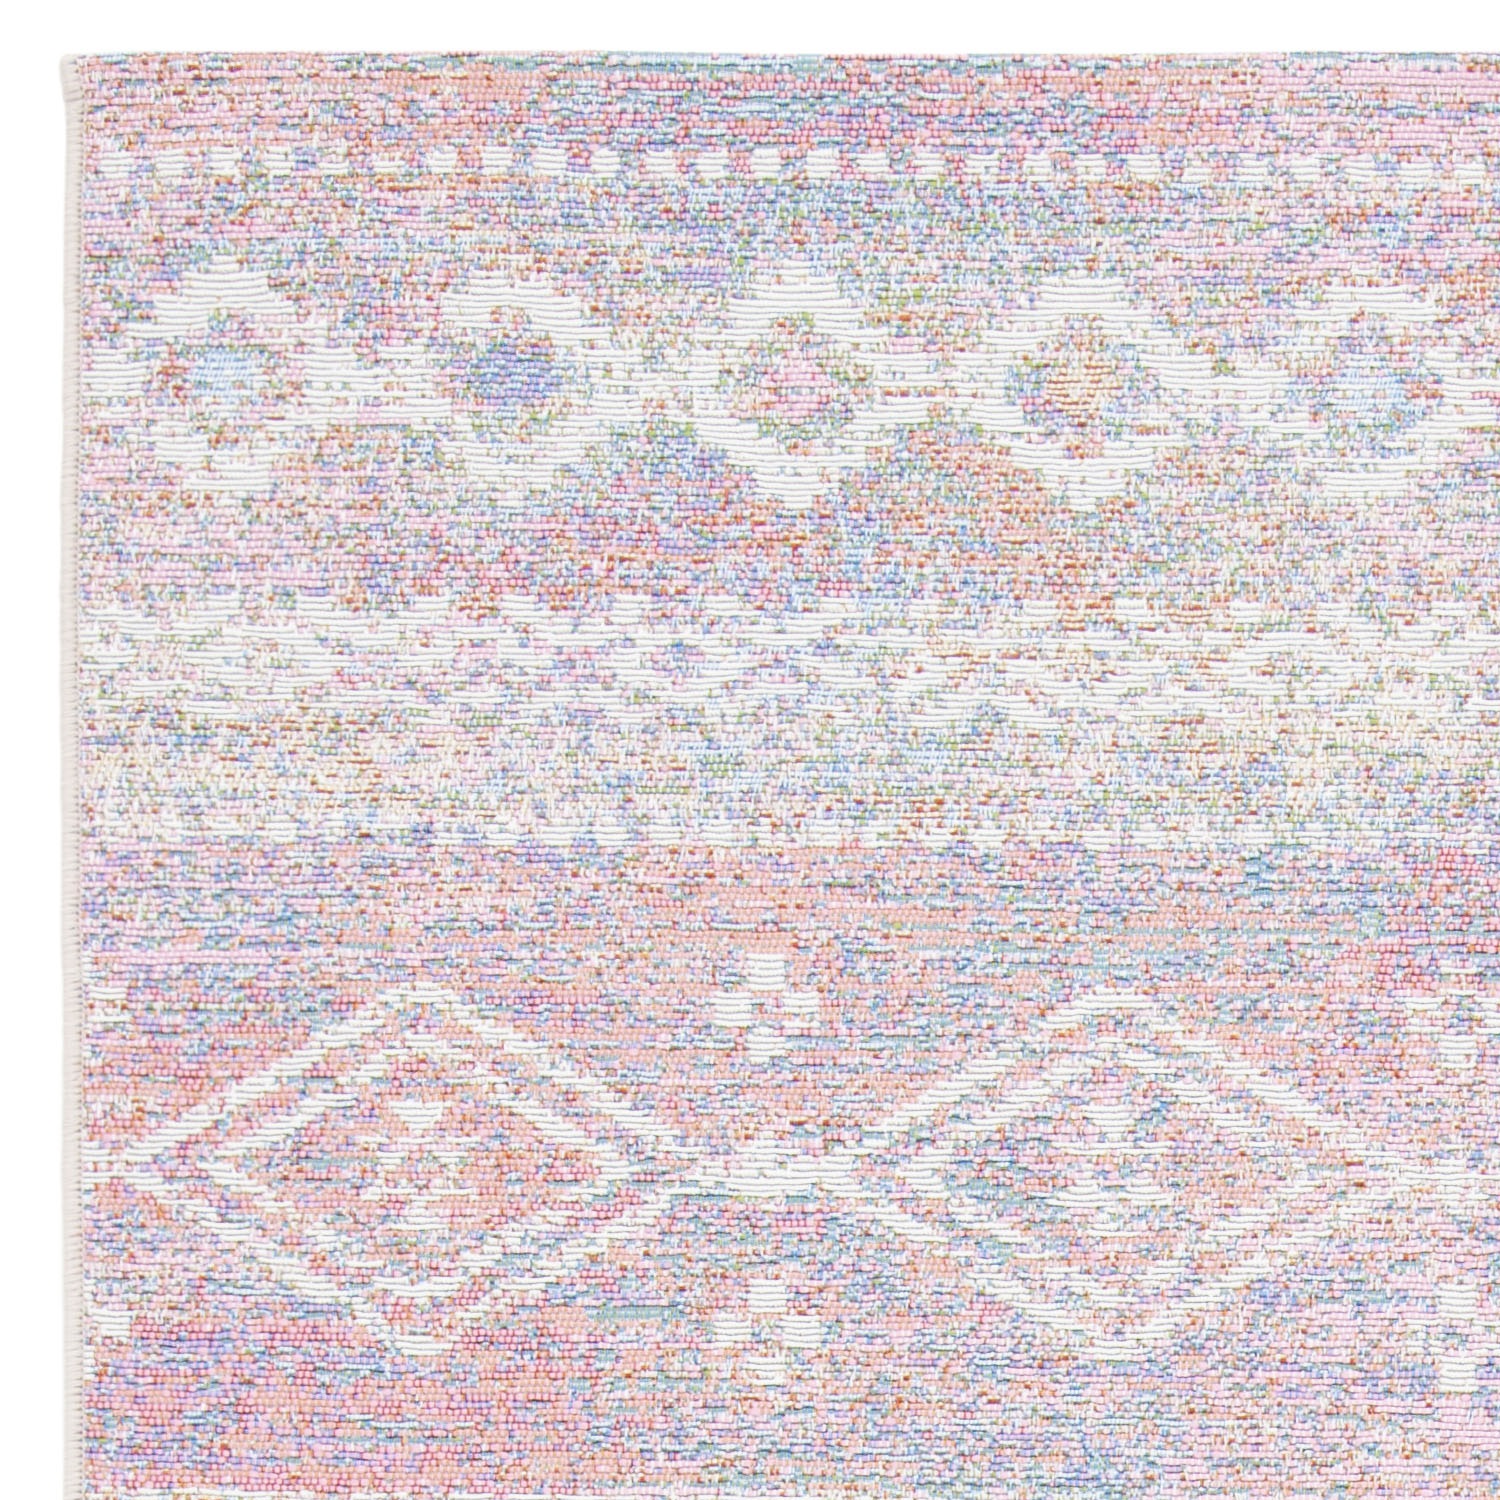 Safavieh Summer Zoja Outdoor Geometric Distressed Area Rug, Ivory/Pink, 5'3" x 7'6" - image 4 of 6